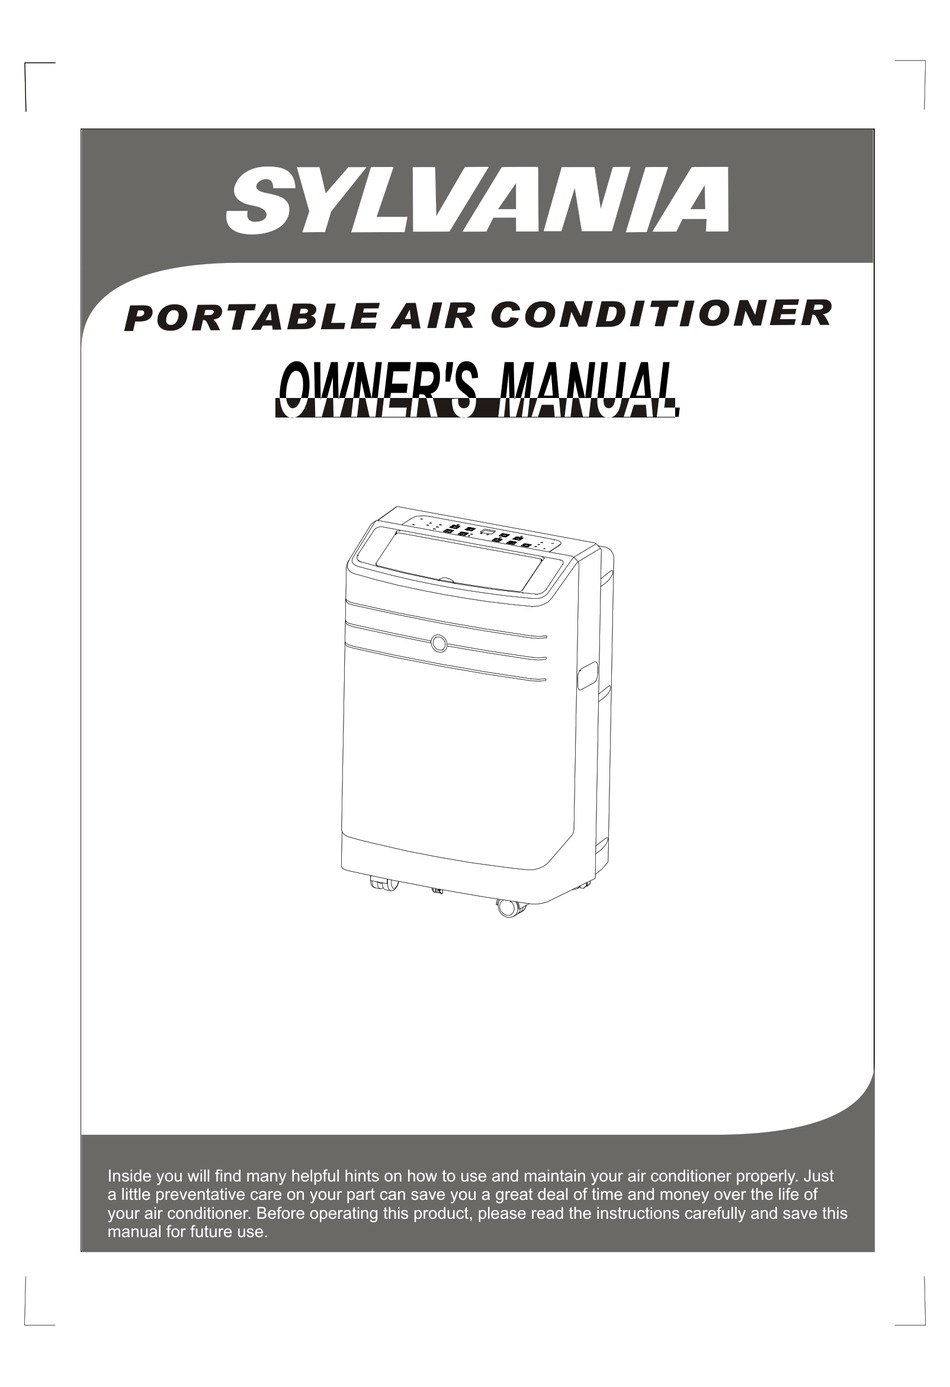 SYLVANIA AIR CONDITIONER OWNER'S MANUAL Pdf Download | ManualsLib